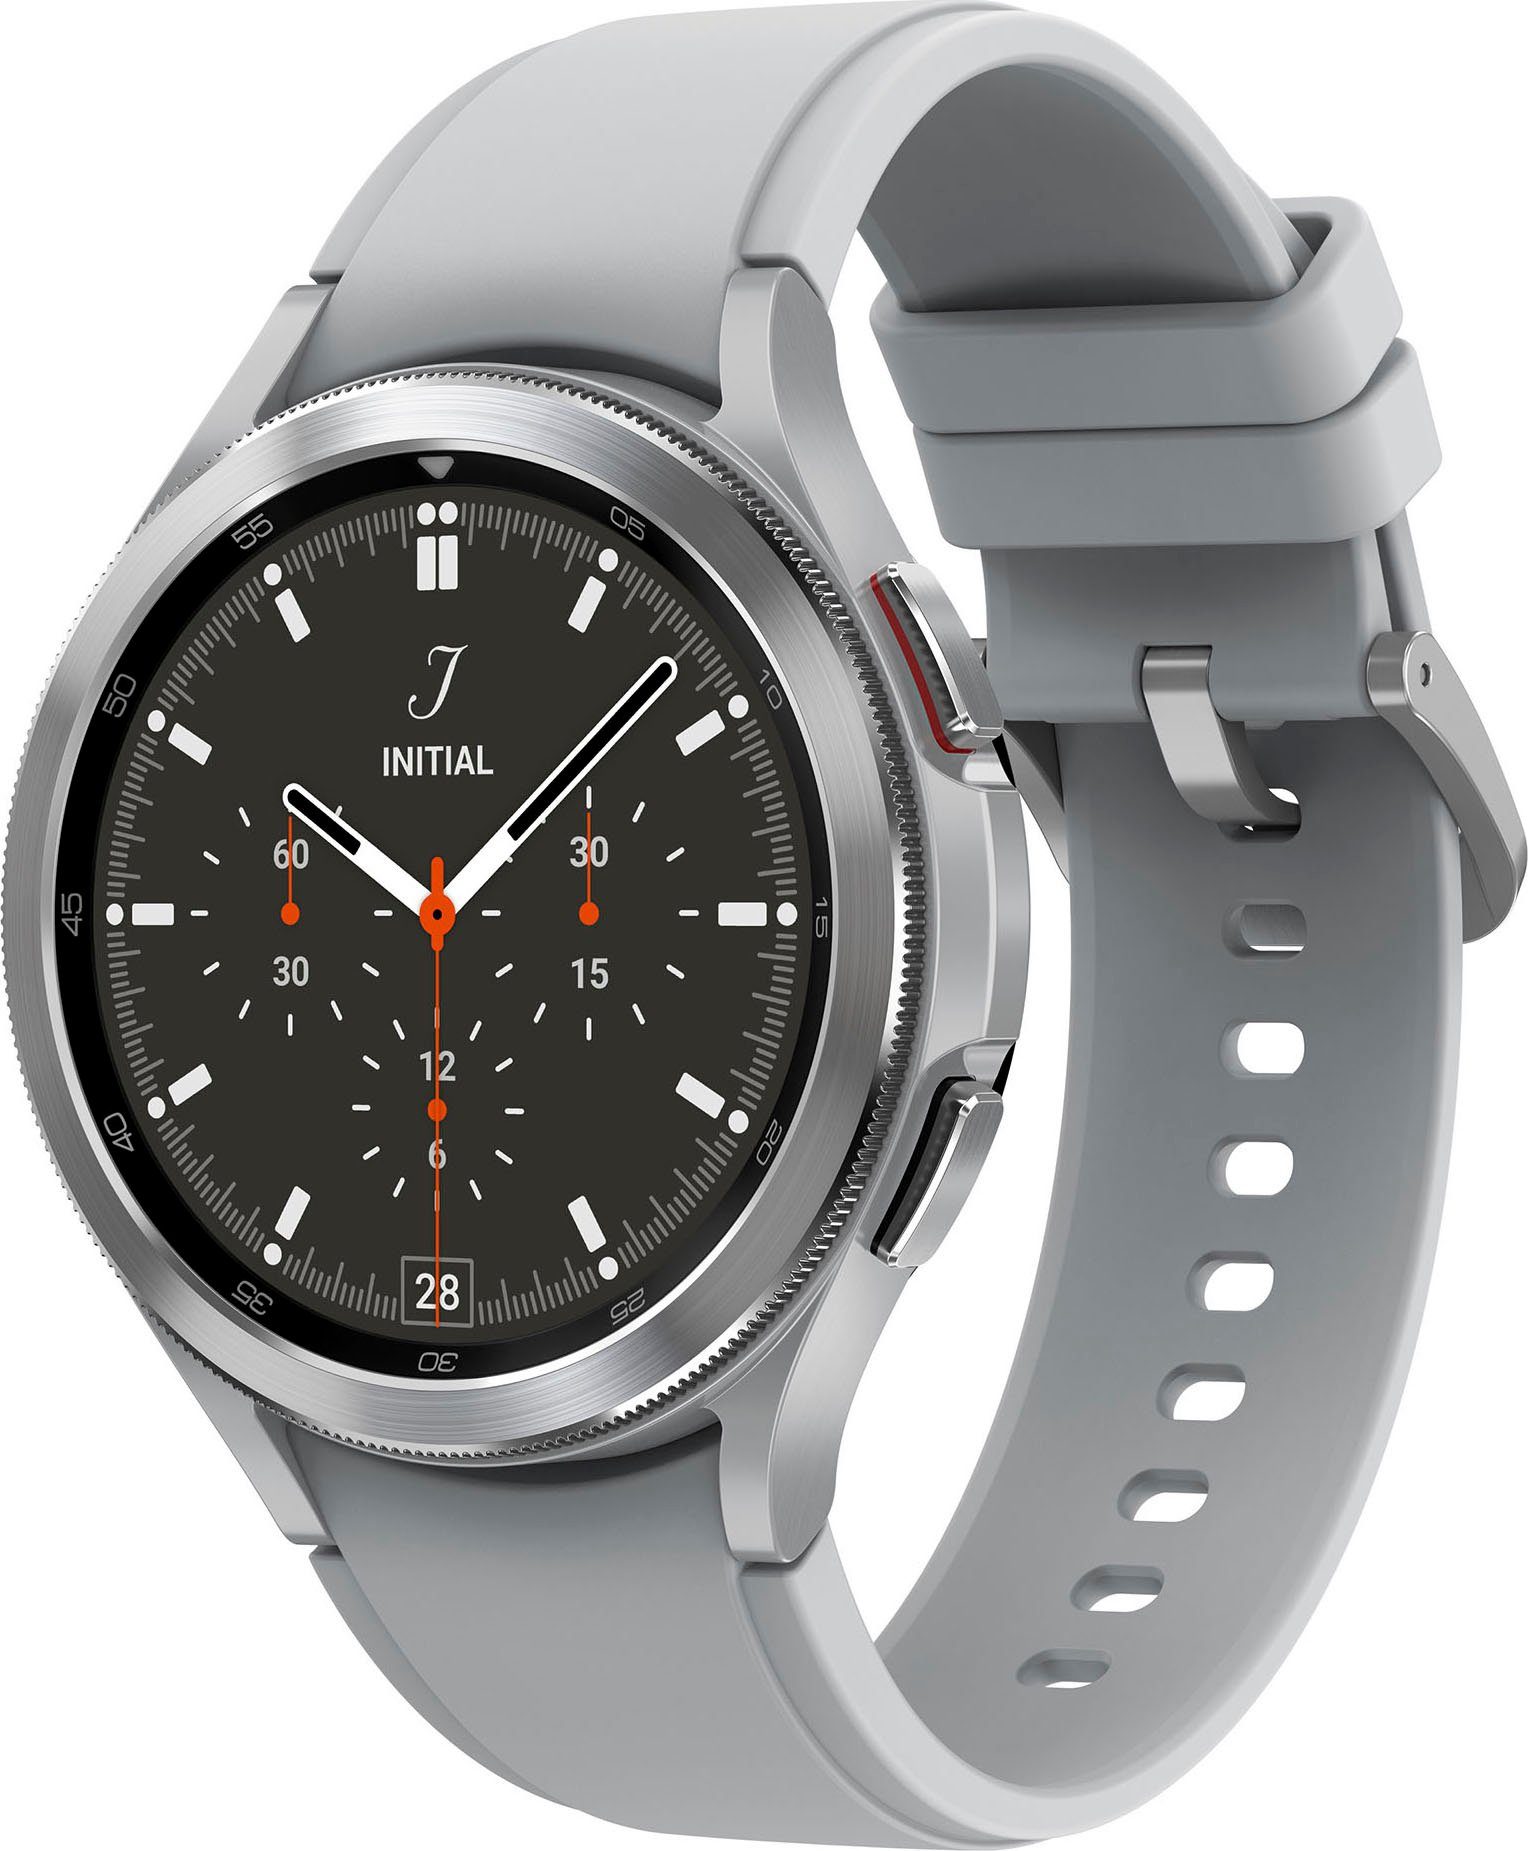 Samsung Galaxy Watch 4 46mm OS Tracker, LTE Gesundheitsfunktionen Wear Fitness Smartwatch classic | cm/1,4 silberfarben by (3,46 Google), silberfarben Uhr, Zoll, Fitness